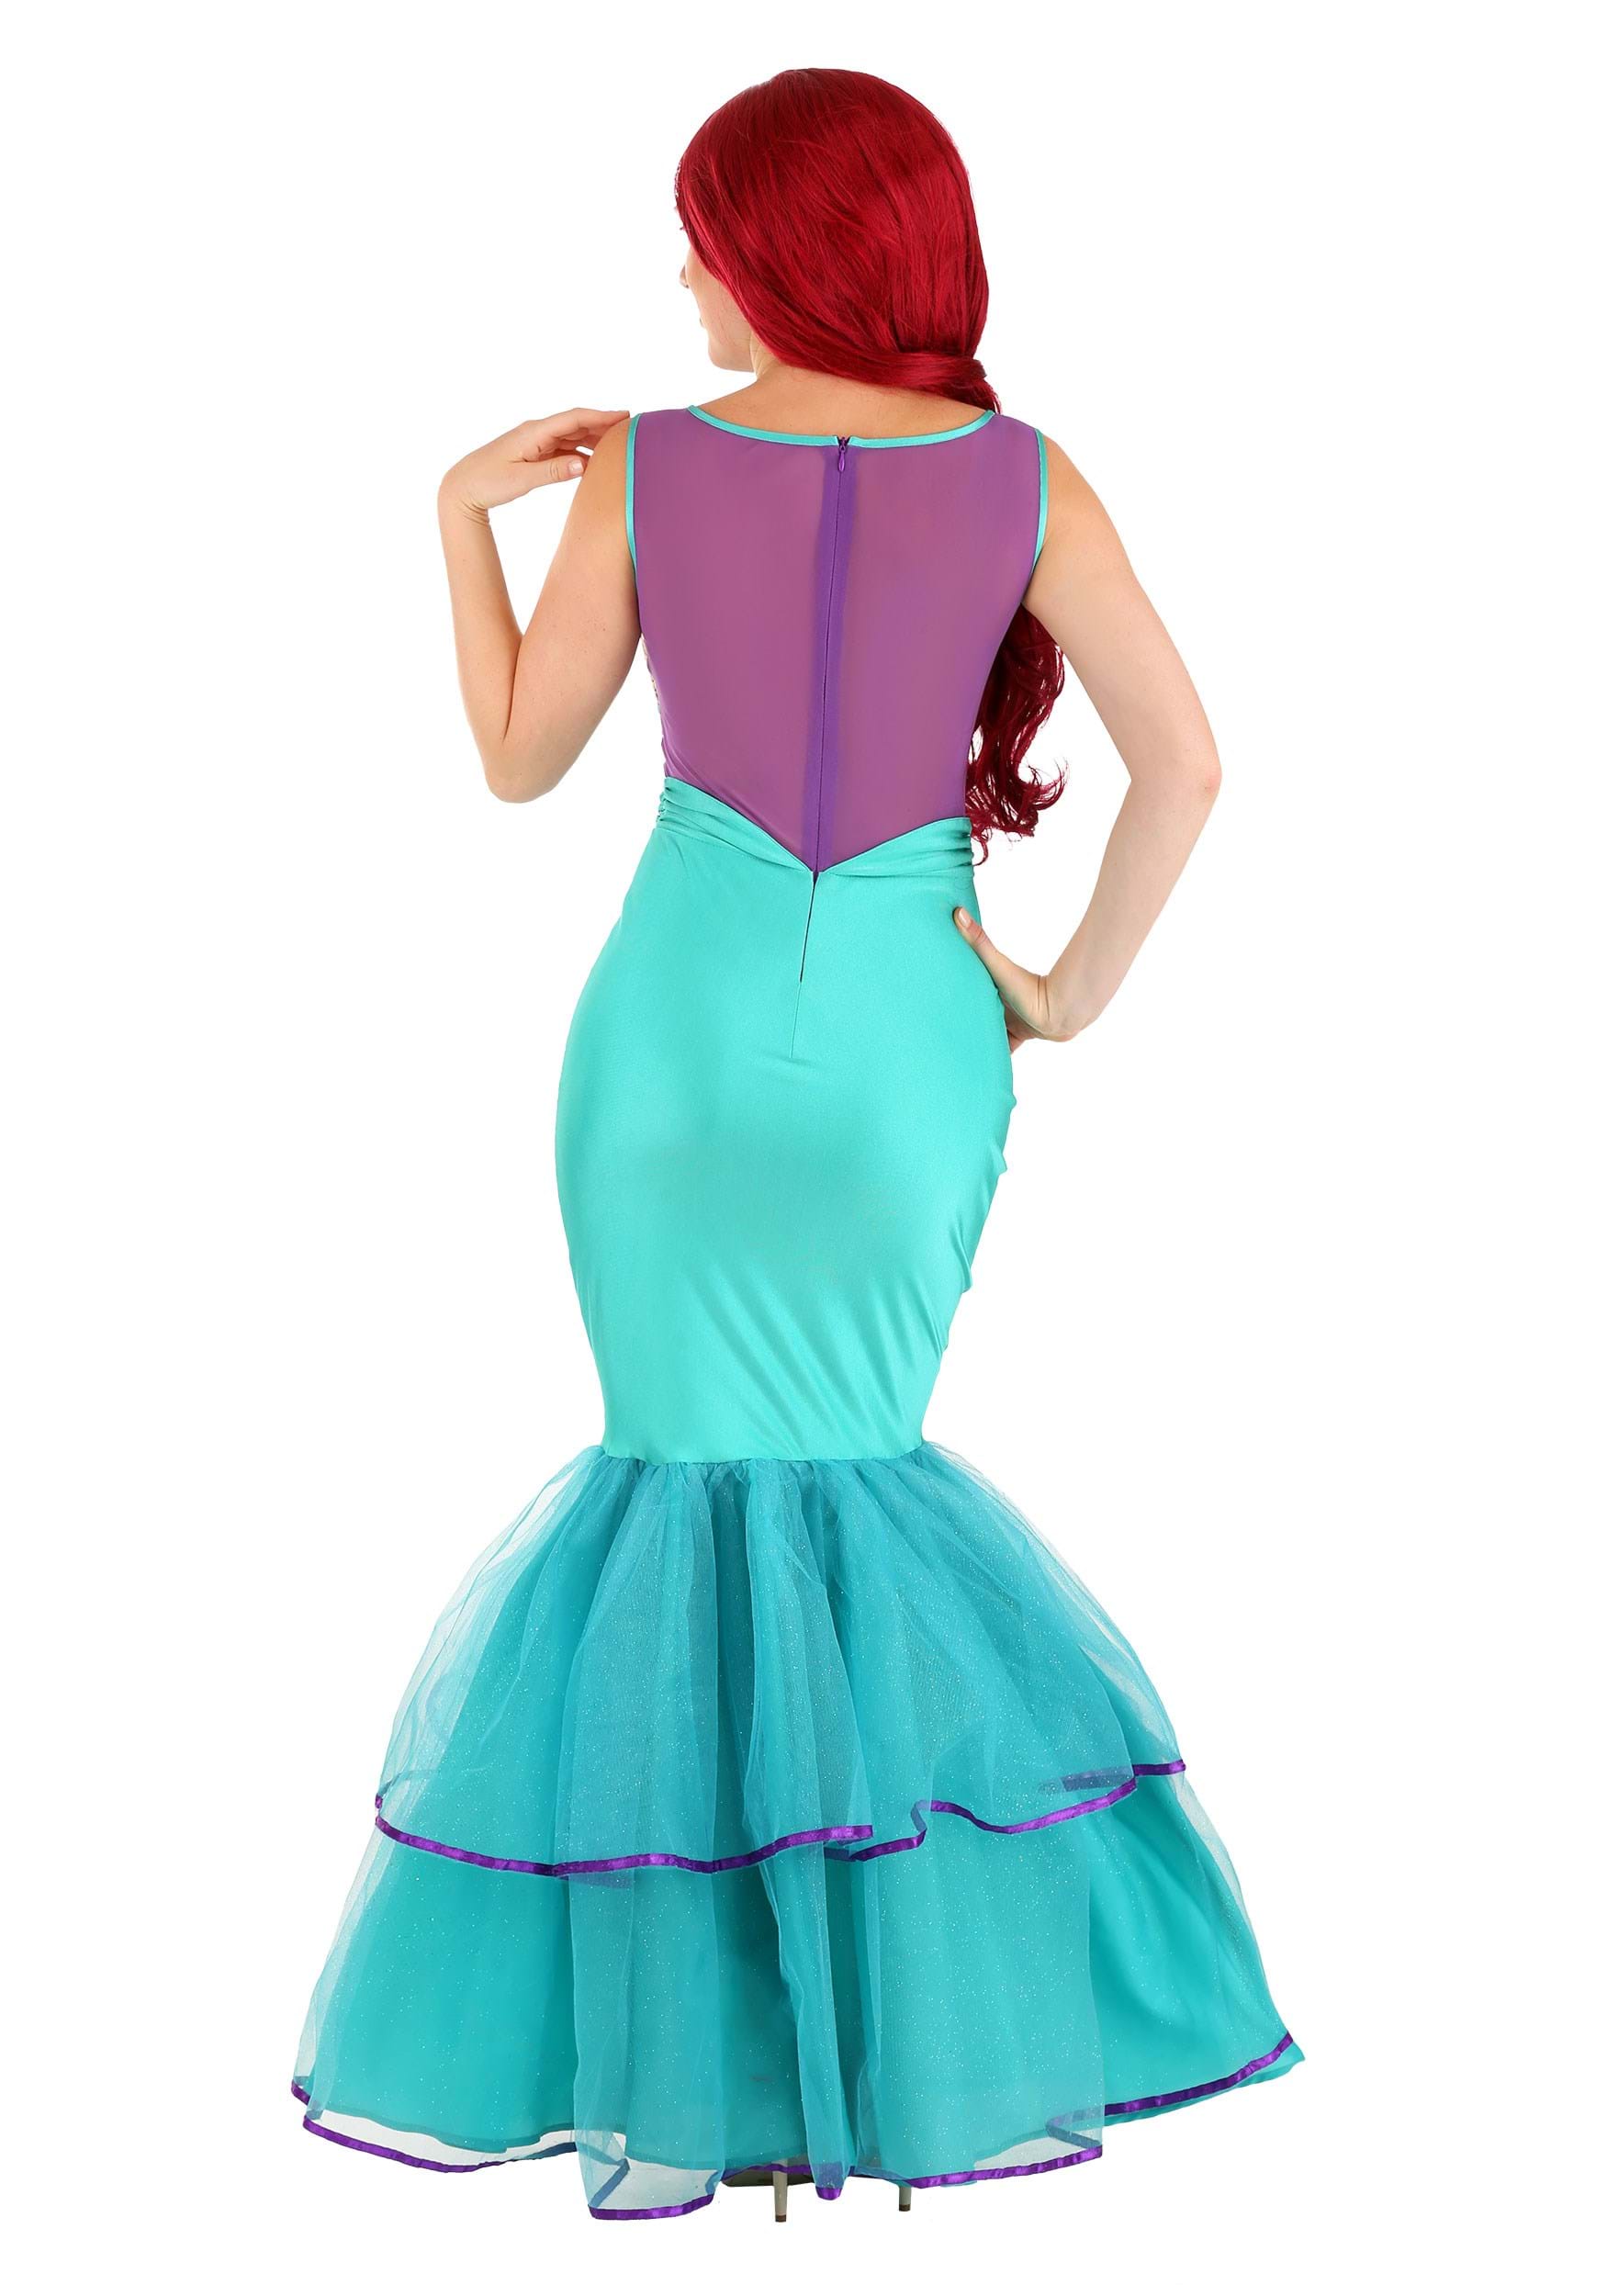 Shell-a-brate Mermaid Costume